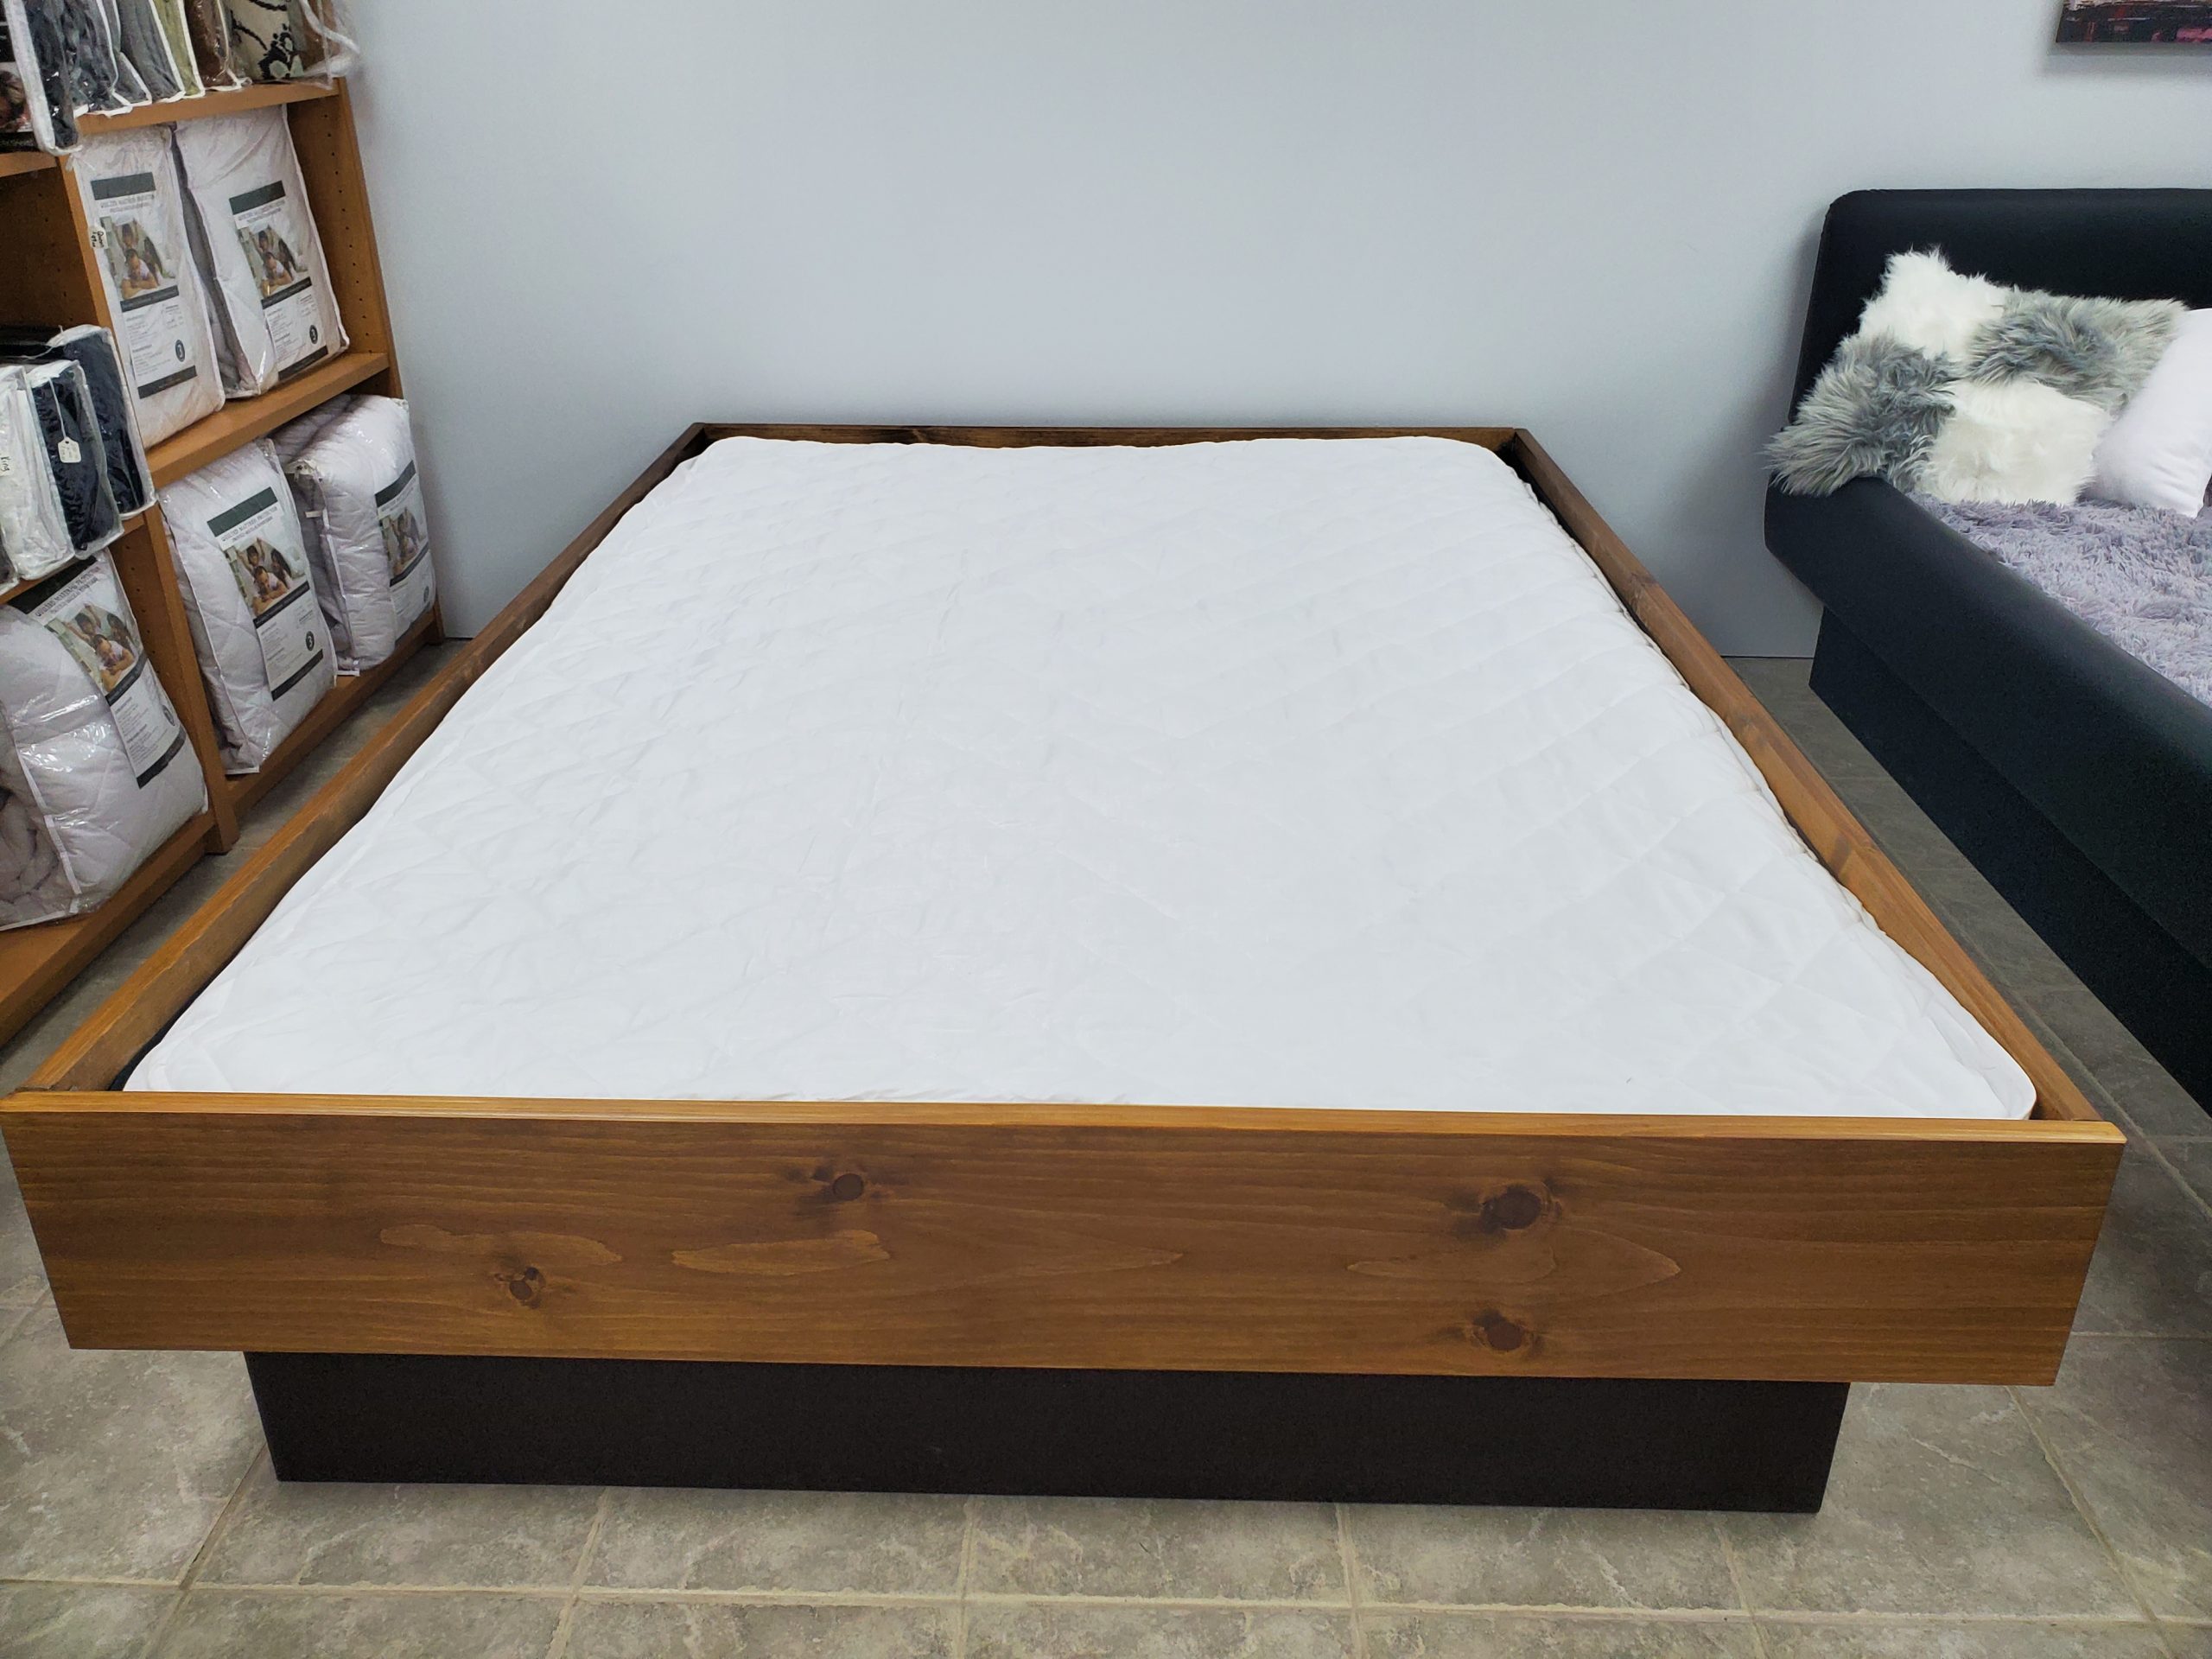 mattress pad for hard mattress